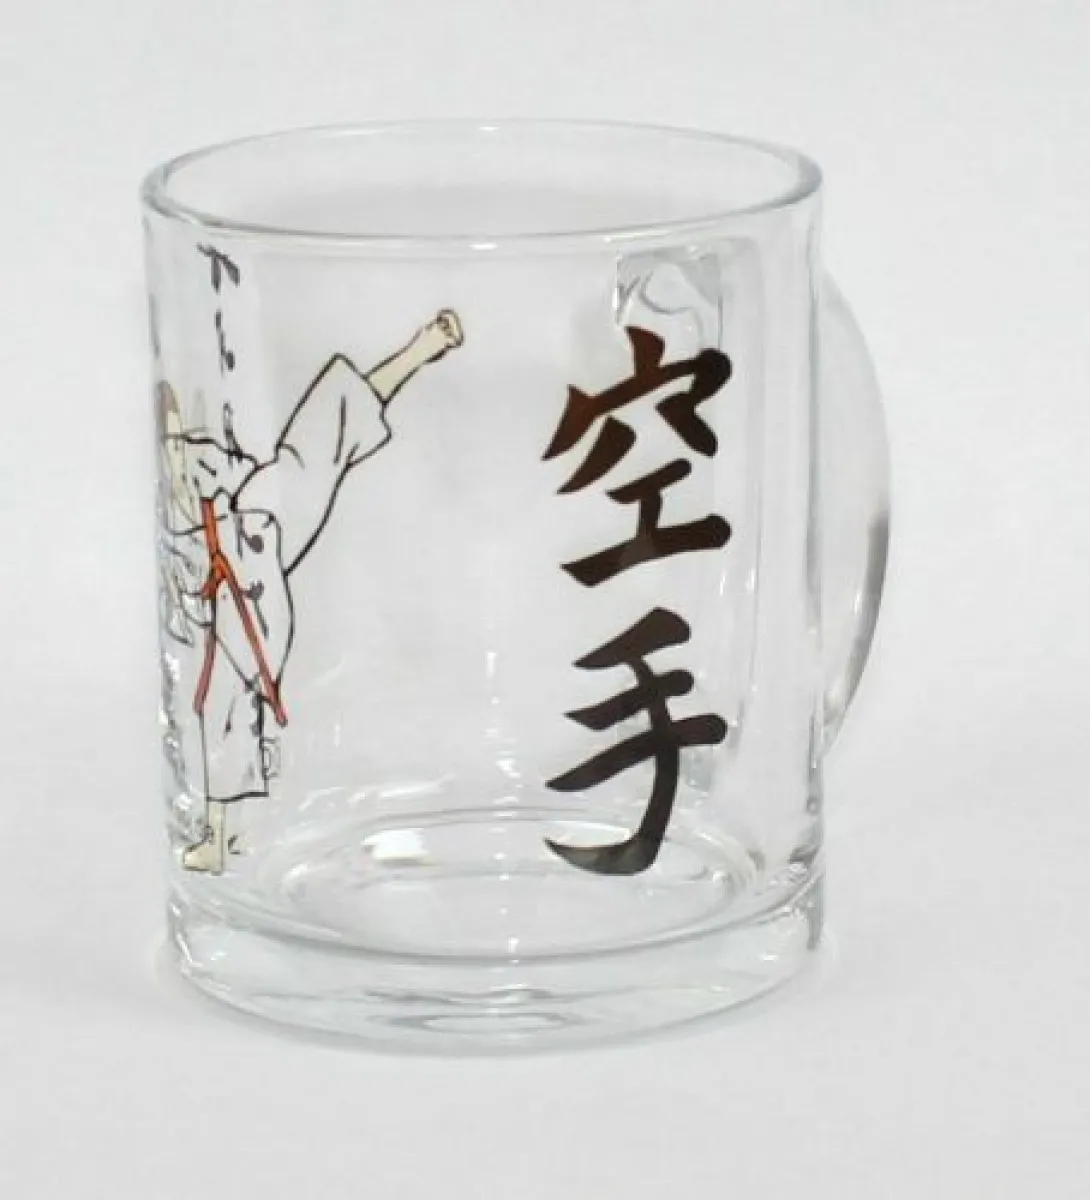 Glass mug with karate figure motif